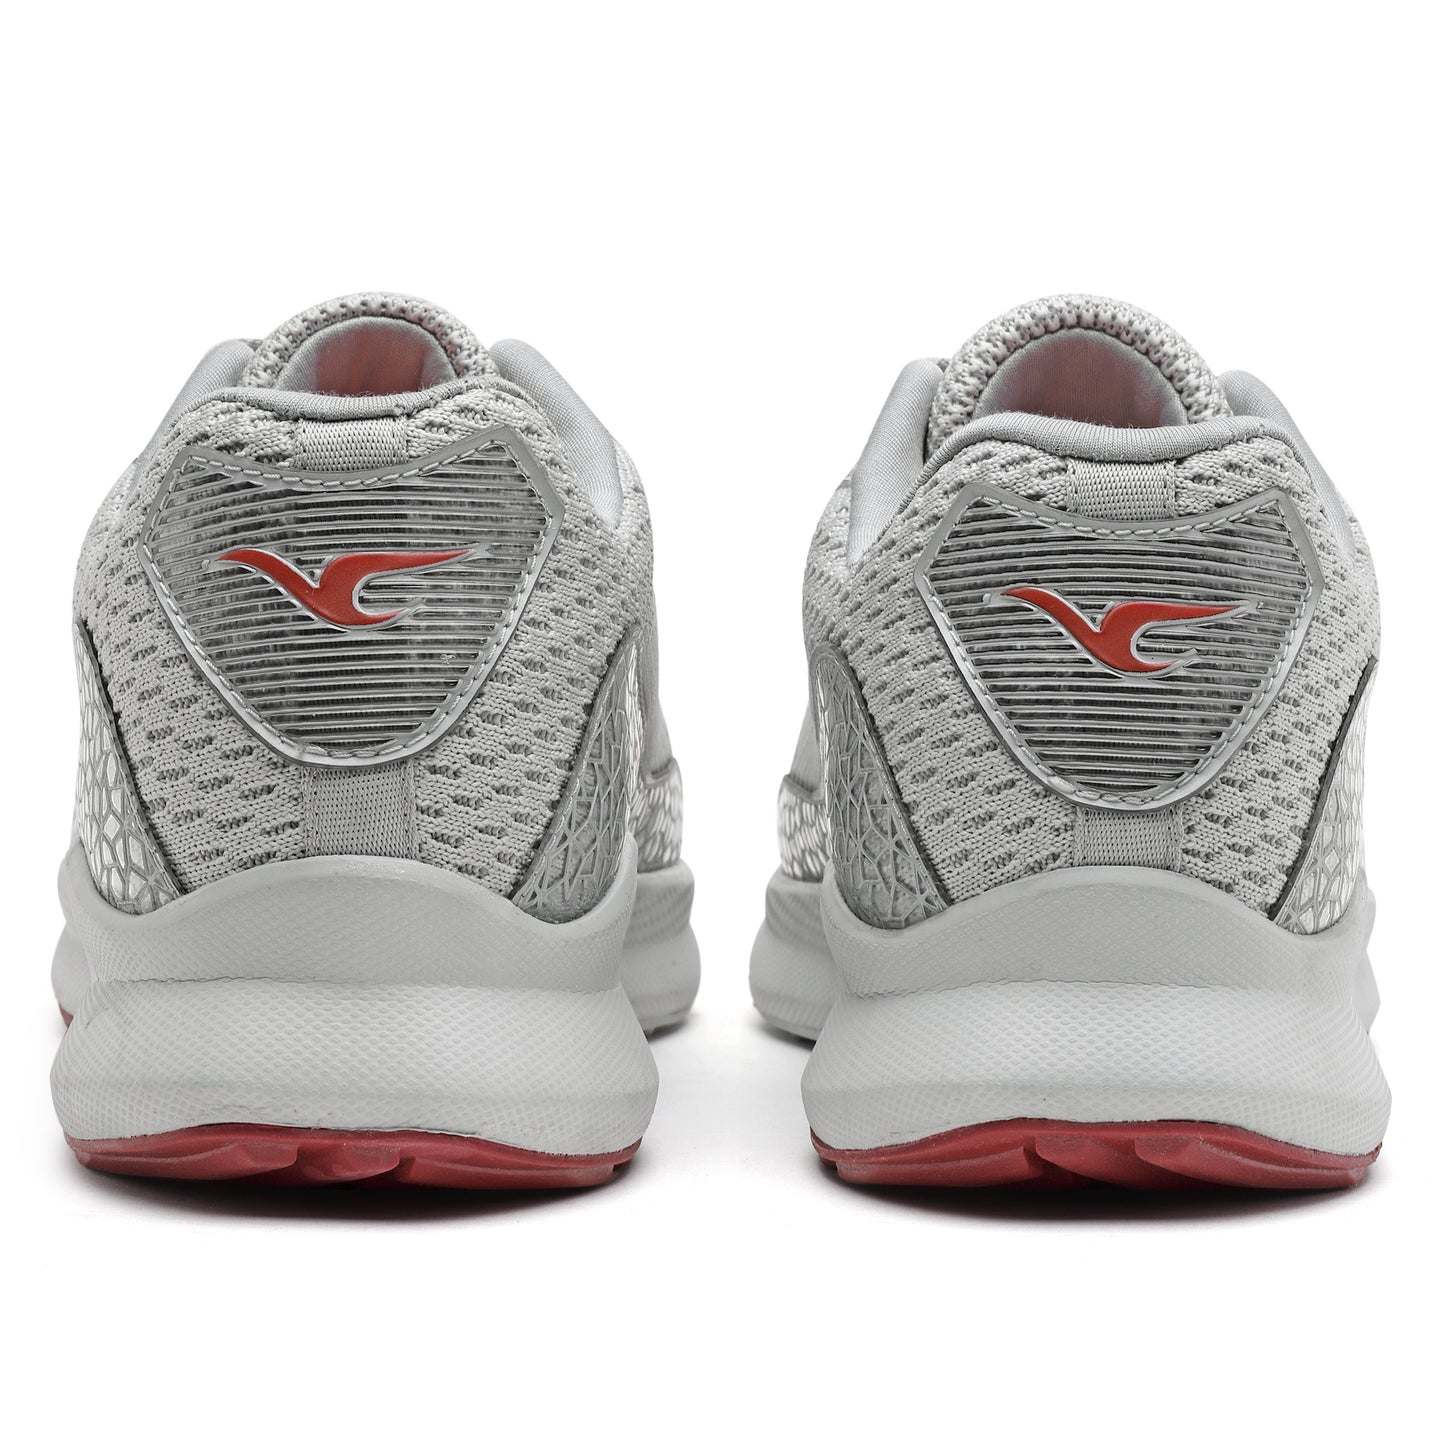 Vomax Sports York-01 Men's Running Sports Shoes